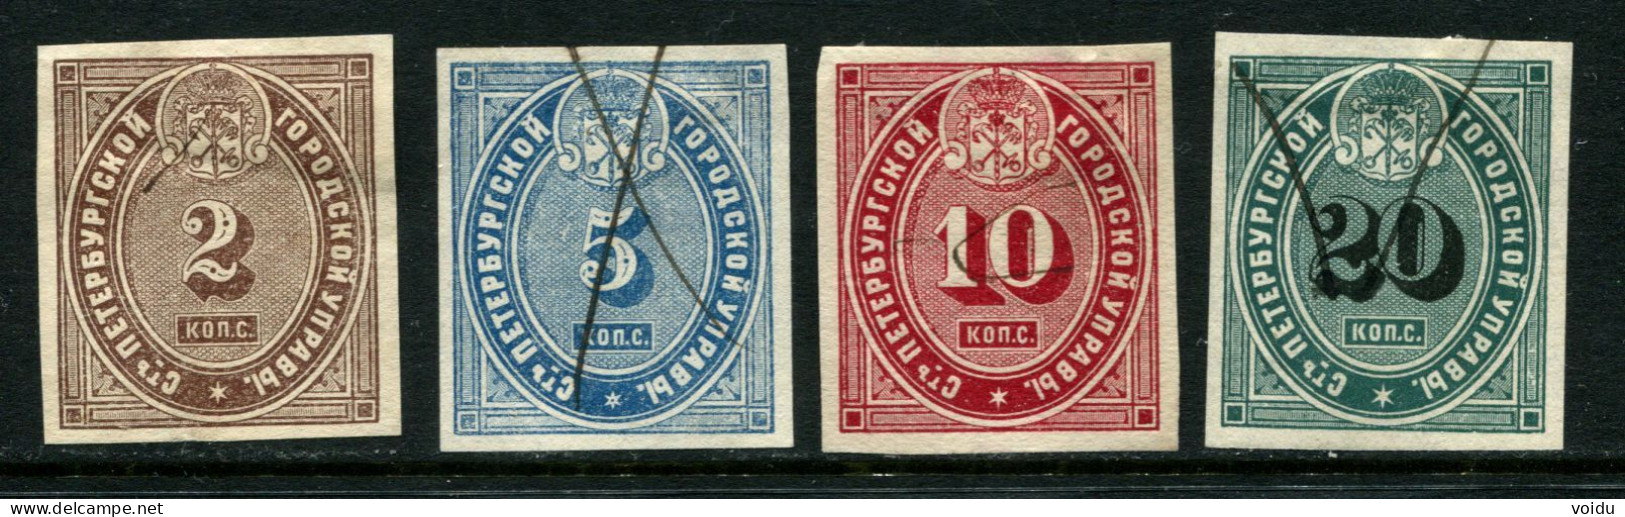 Russia Revenue Stamps - Steuermarken